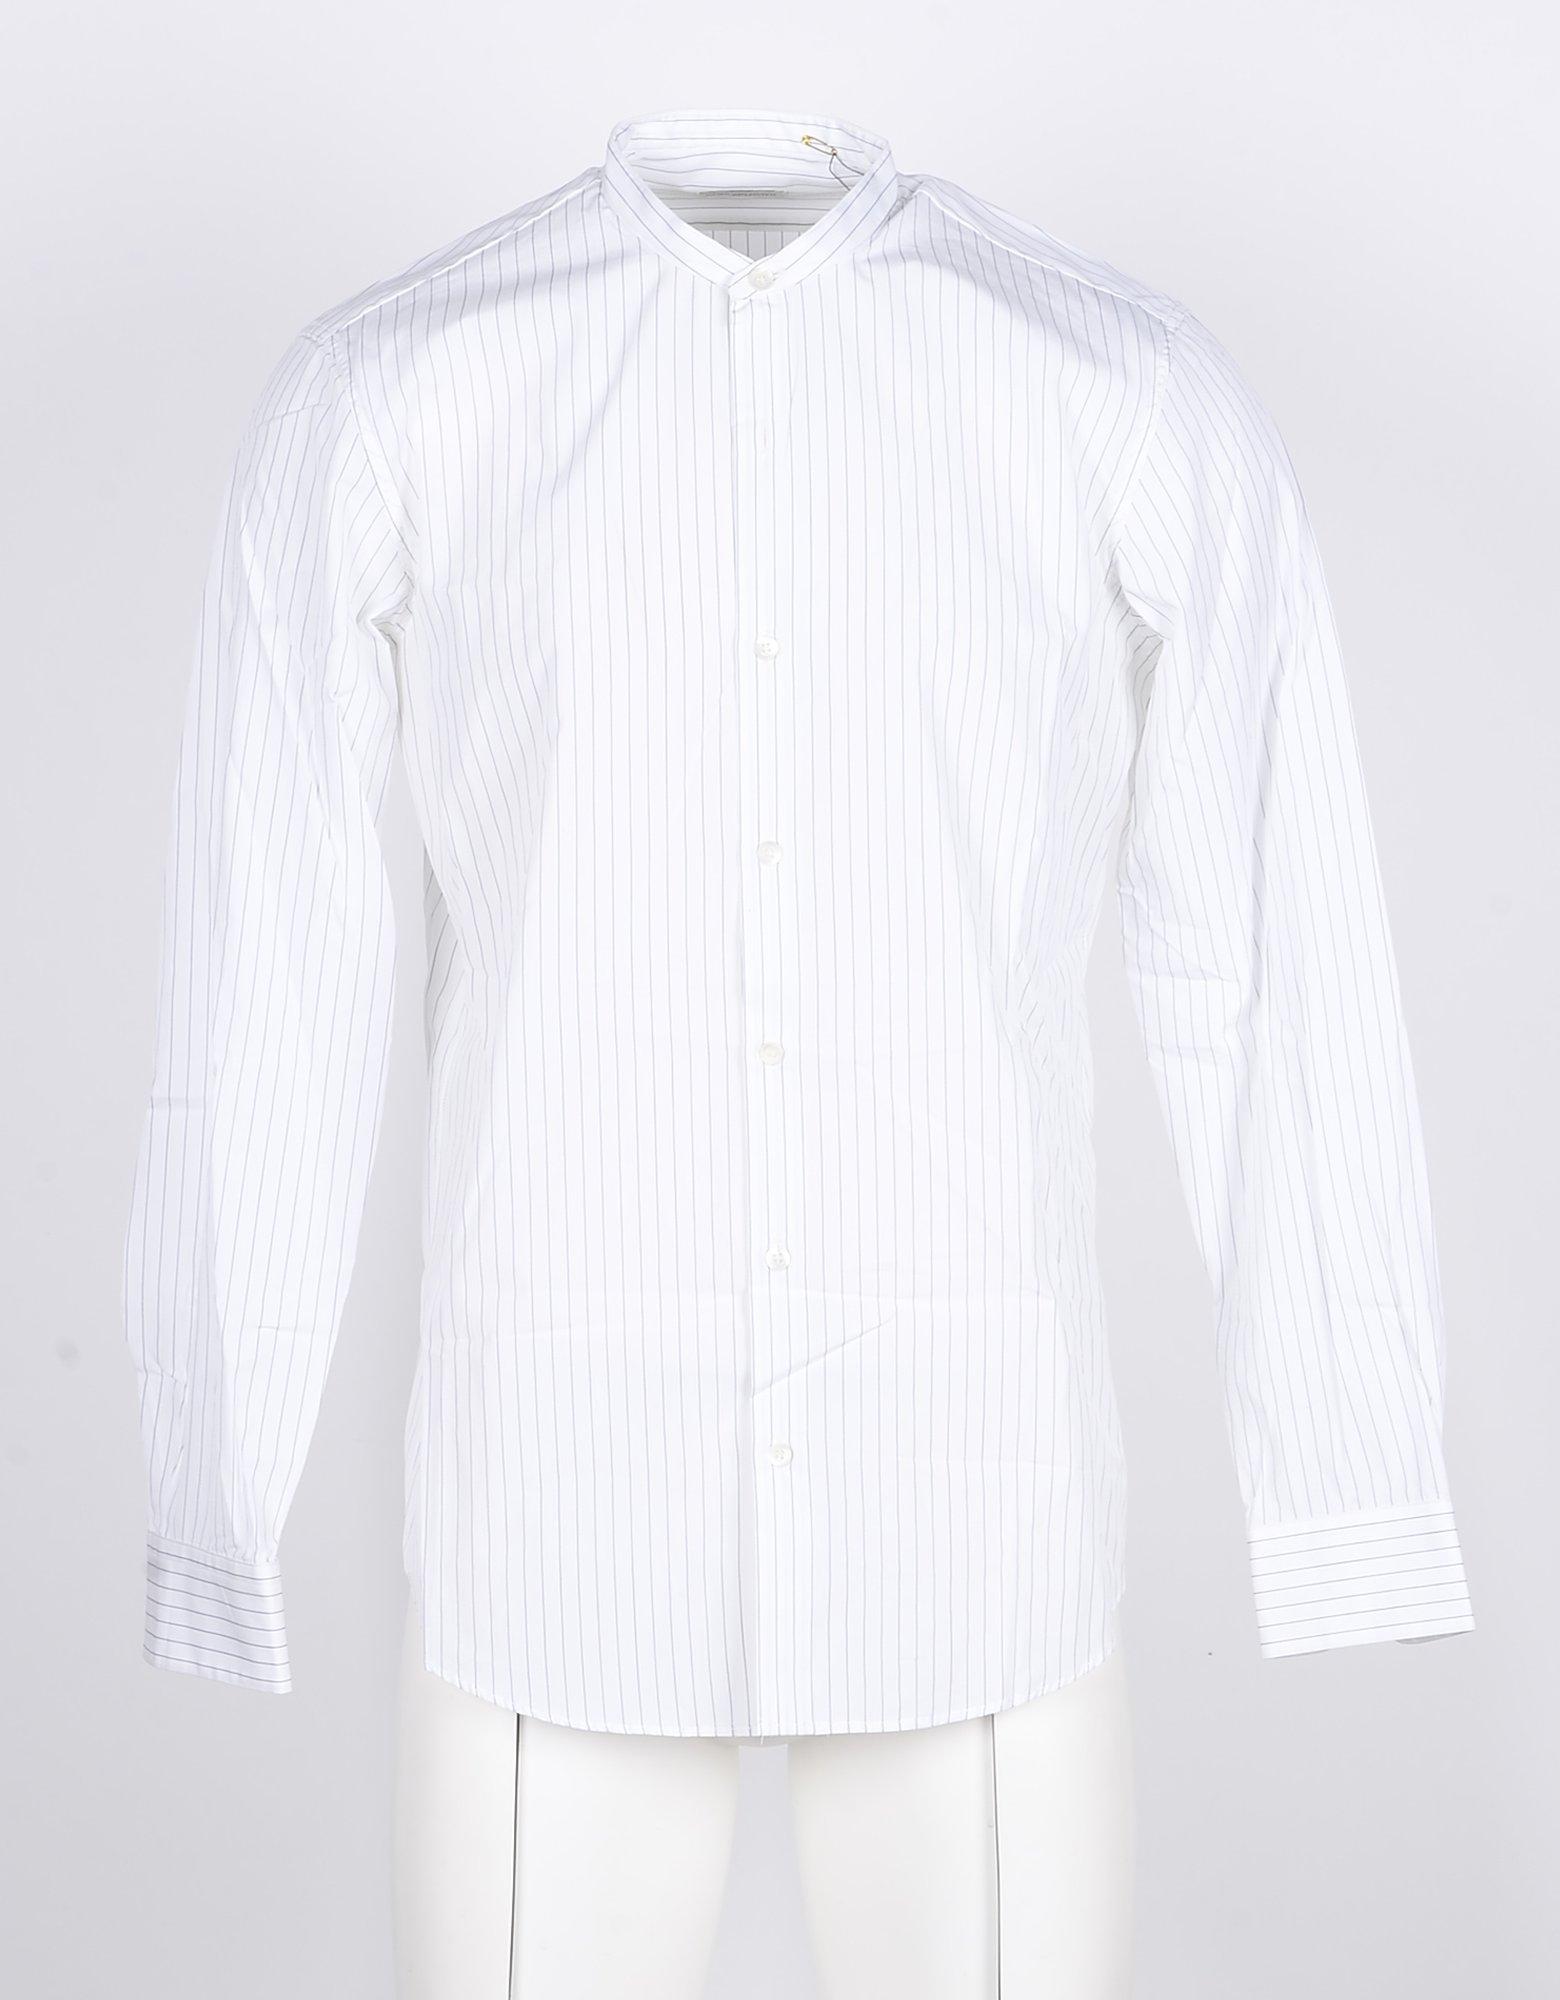 Dries Van Noten White Striped Cotton Men's Shirt w/Mandarin Collar